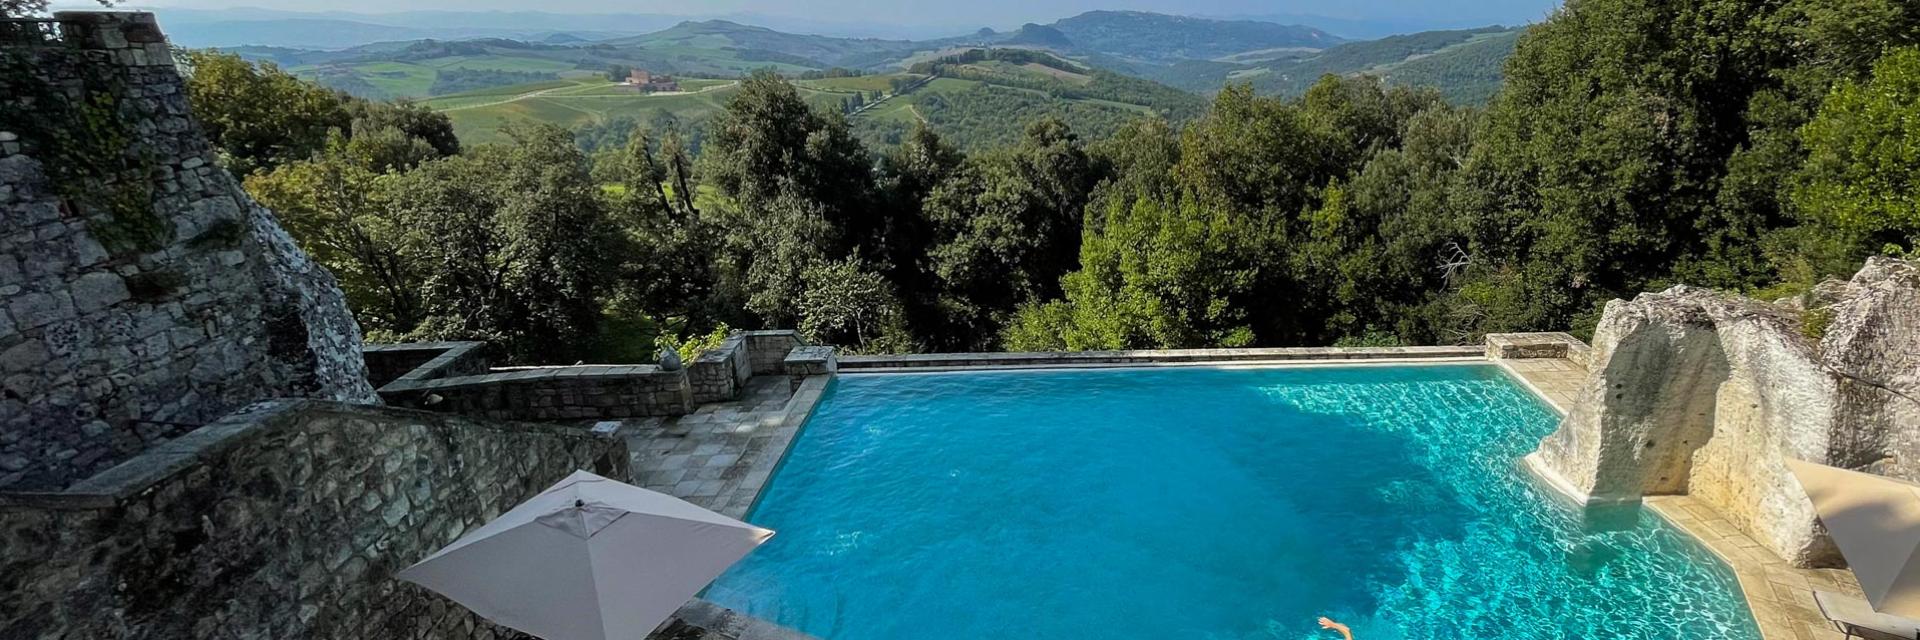 Borgo Pignano Pool View